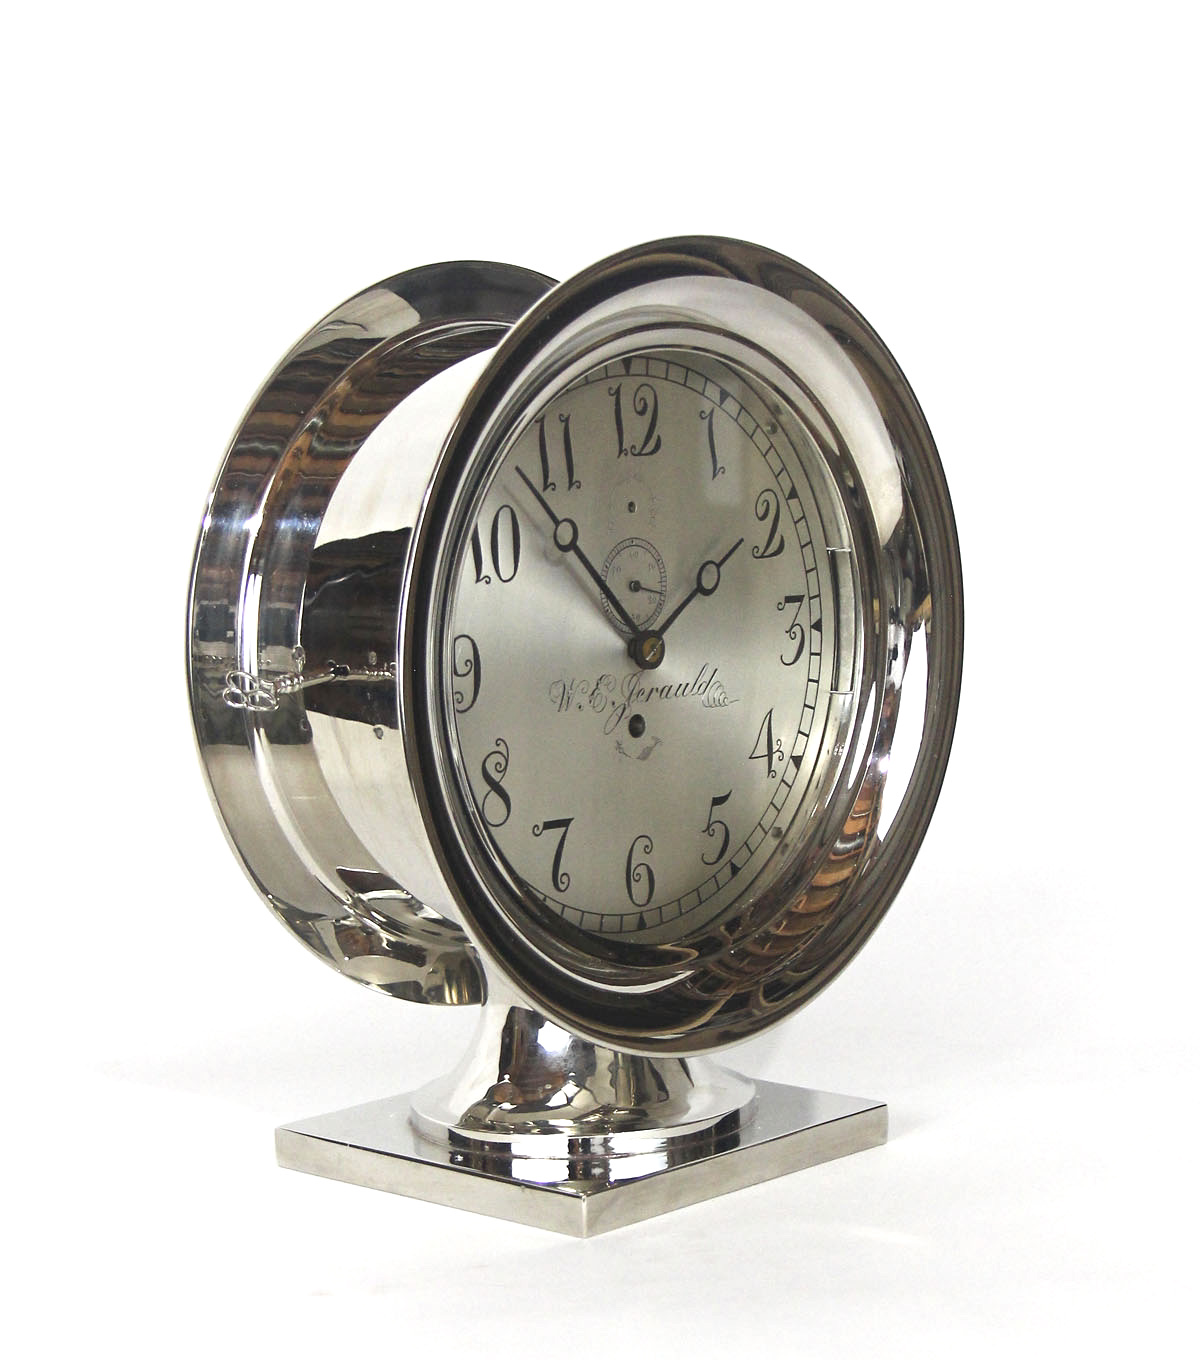 E. Howard 8 1/2 inch Pedestal Clock for American Steam Gauge Co. and W E Jerauld